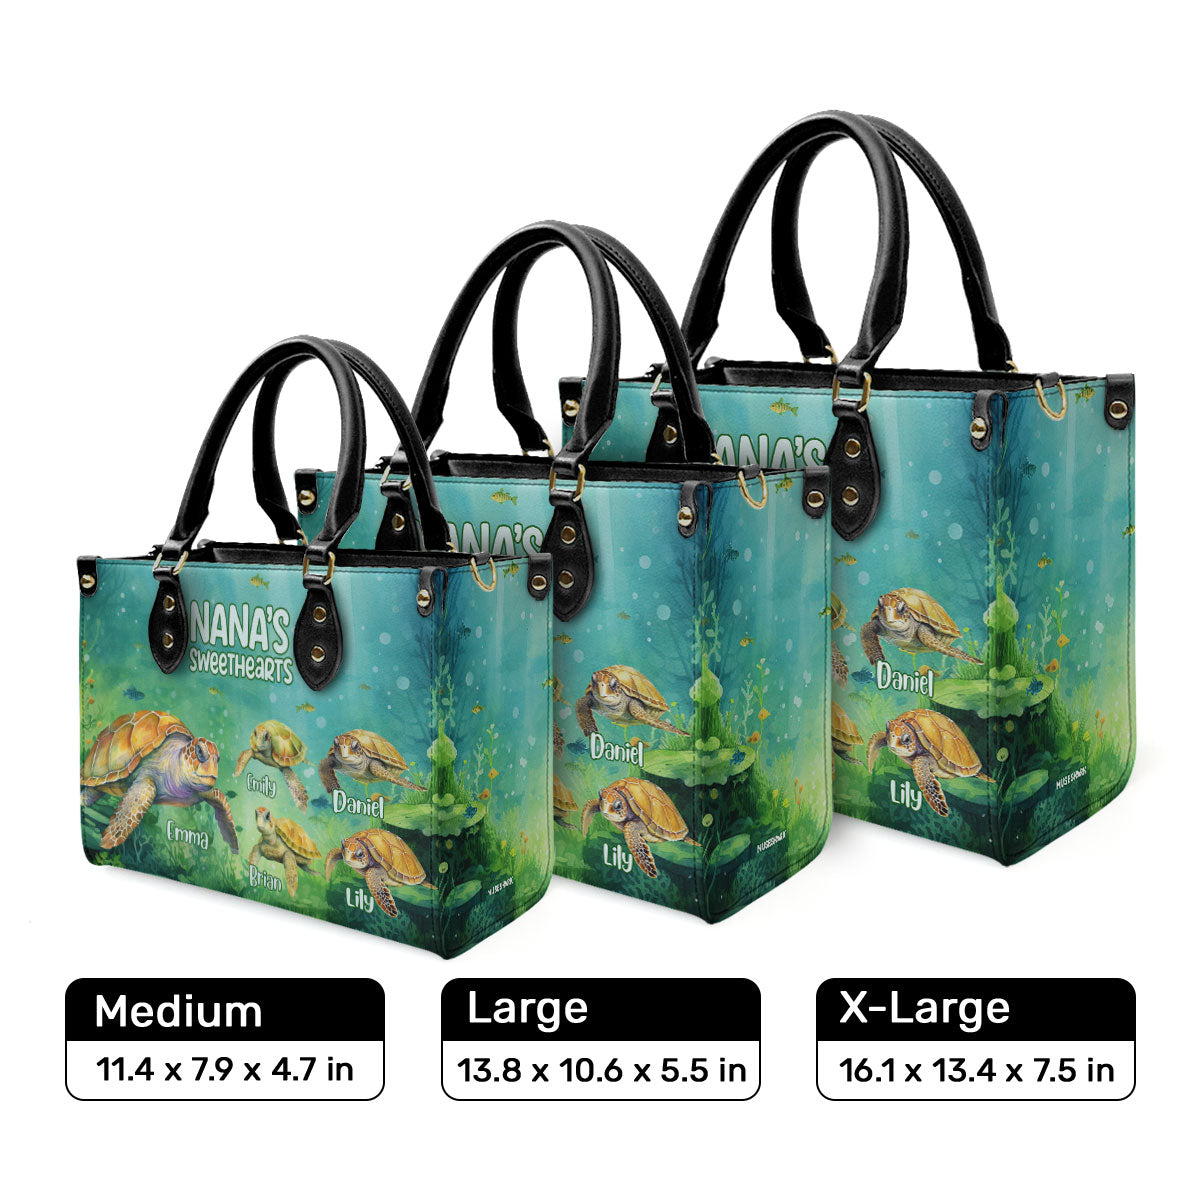 Nana's Sweethearts - Turtle Personalized Leather Handbag MS-H94